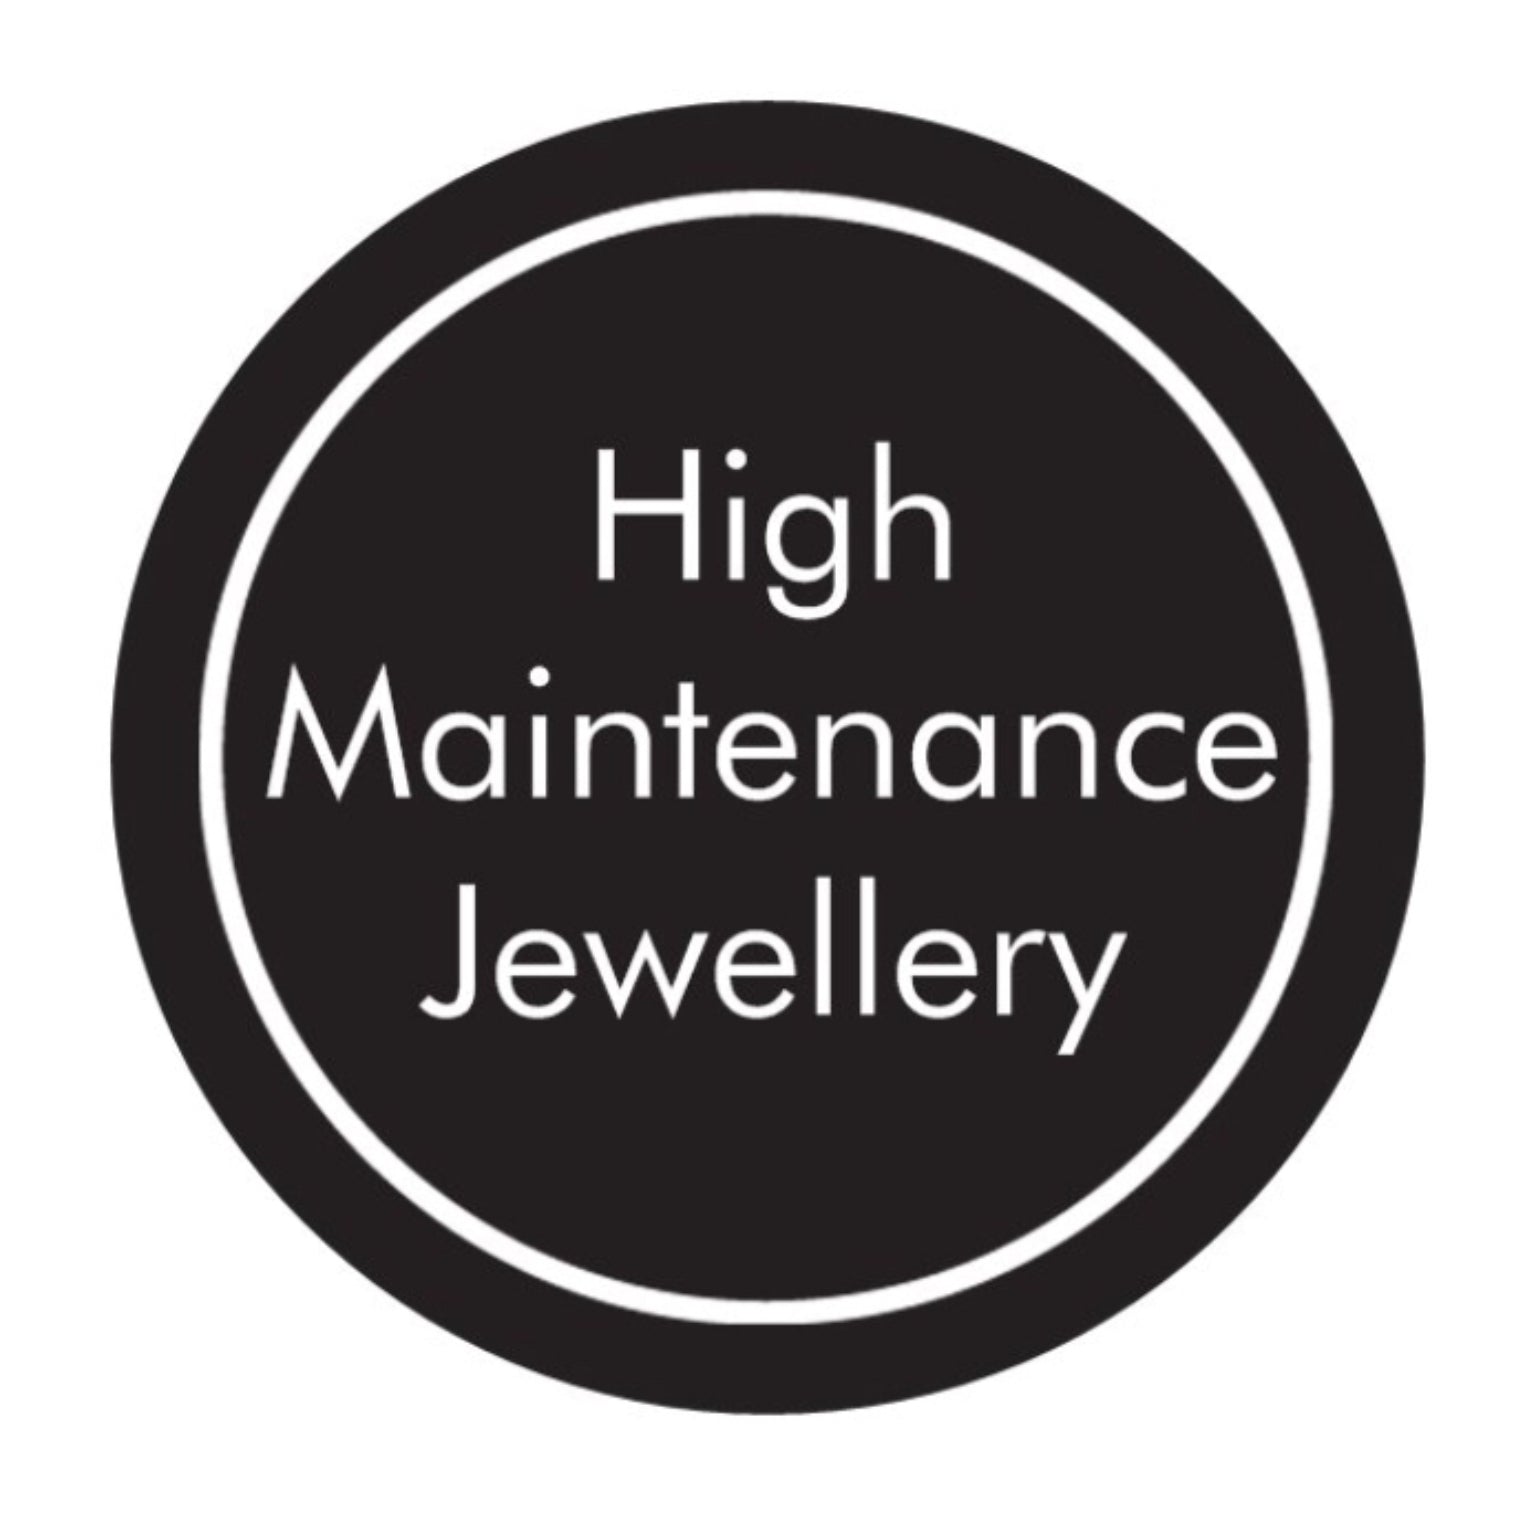 £50 HMJ Gift Card Voucher - High Maintenance Jewellery